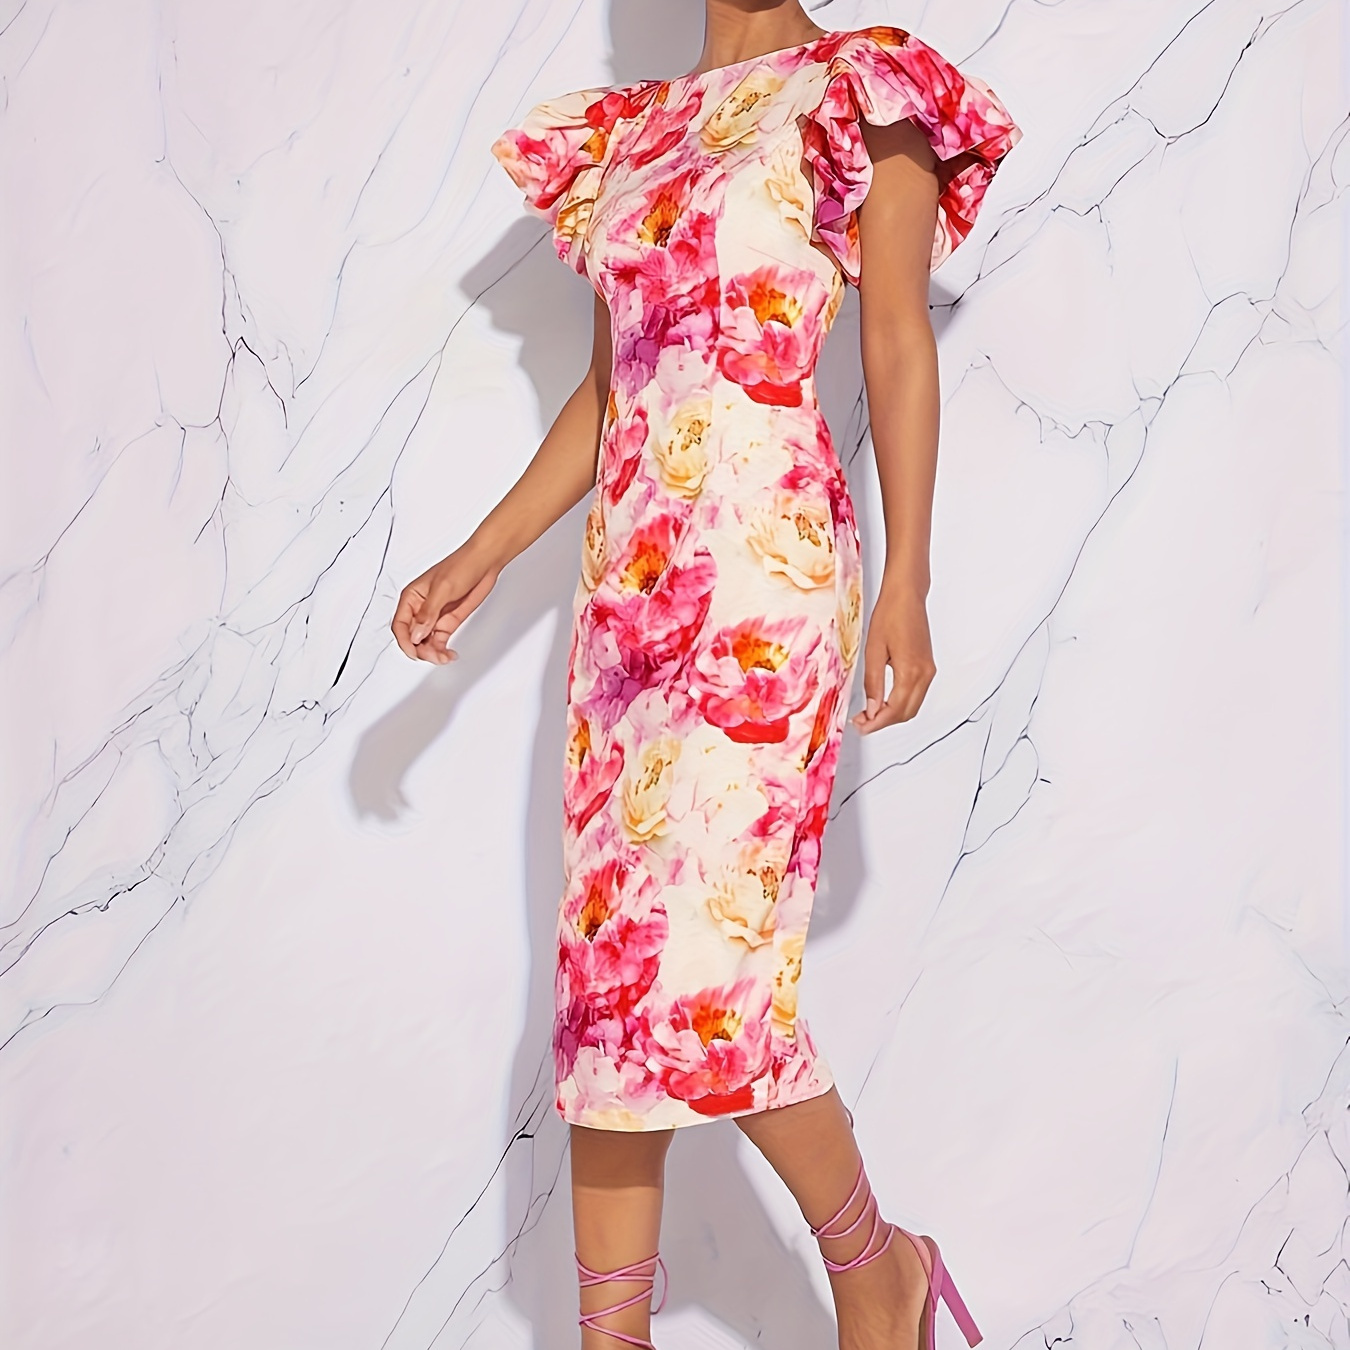 

Floral Print Flutter Sleeve Dress, Stylish Crew Neck Tie Back Sheath Dress For Spring & Summer, Women's Clothing